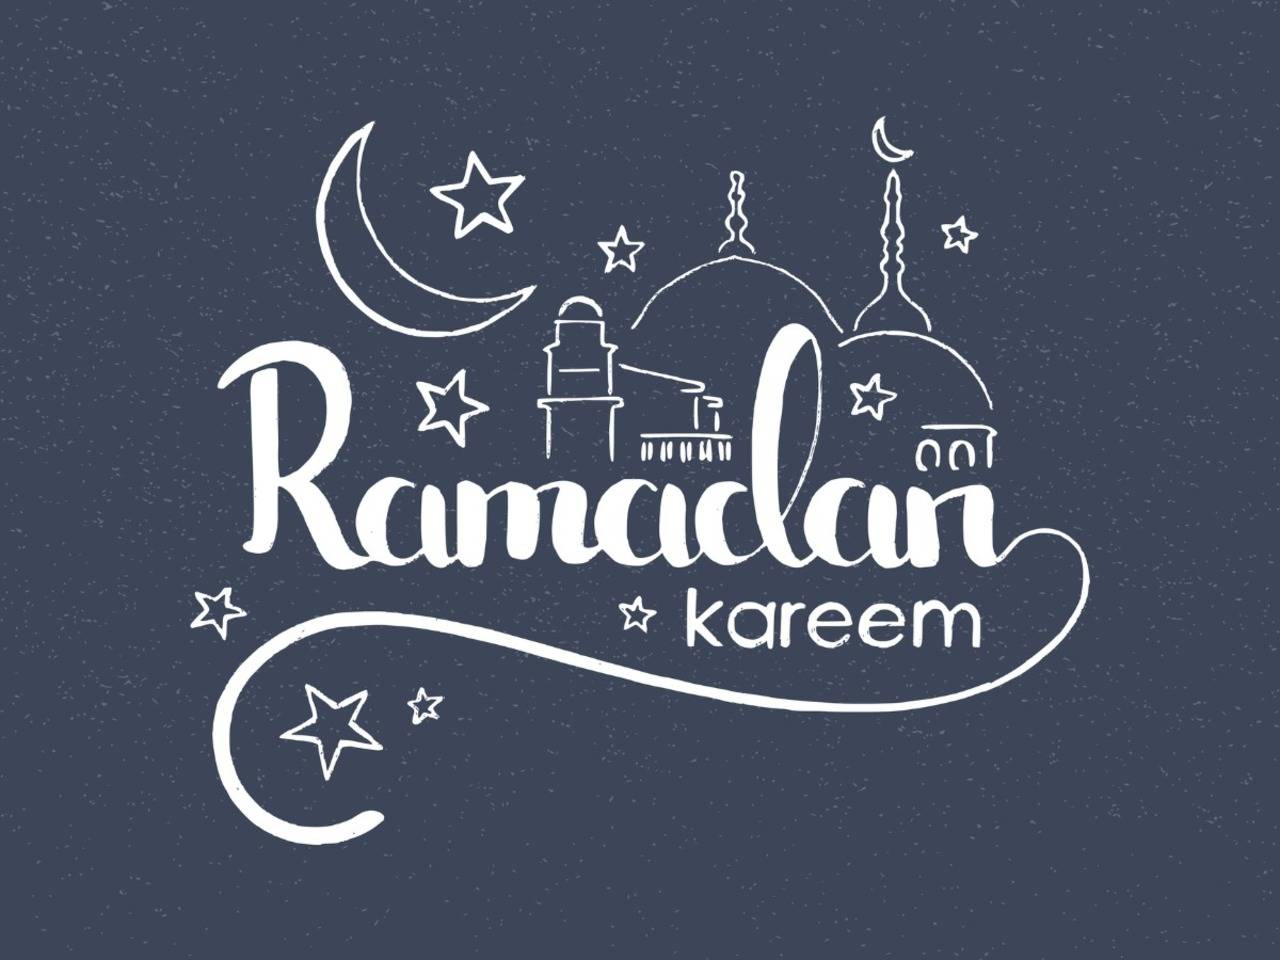 Astonishing Compilation of 999+ Ramadan Mubarak Images in Full 4K Quality